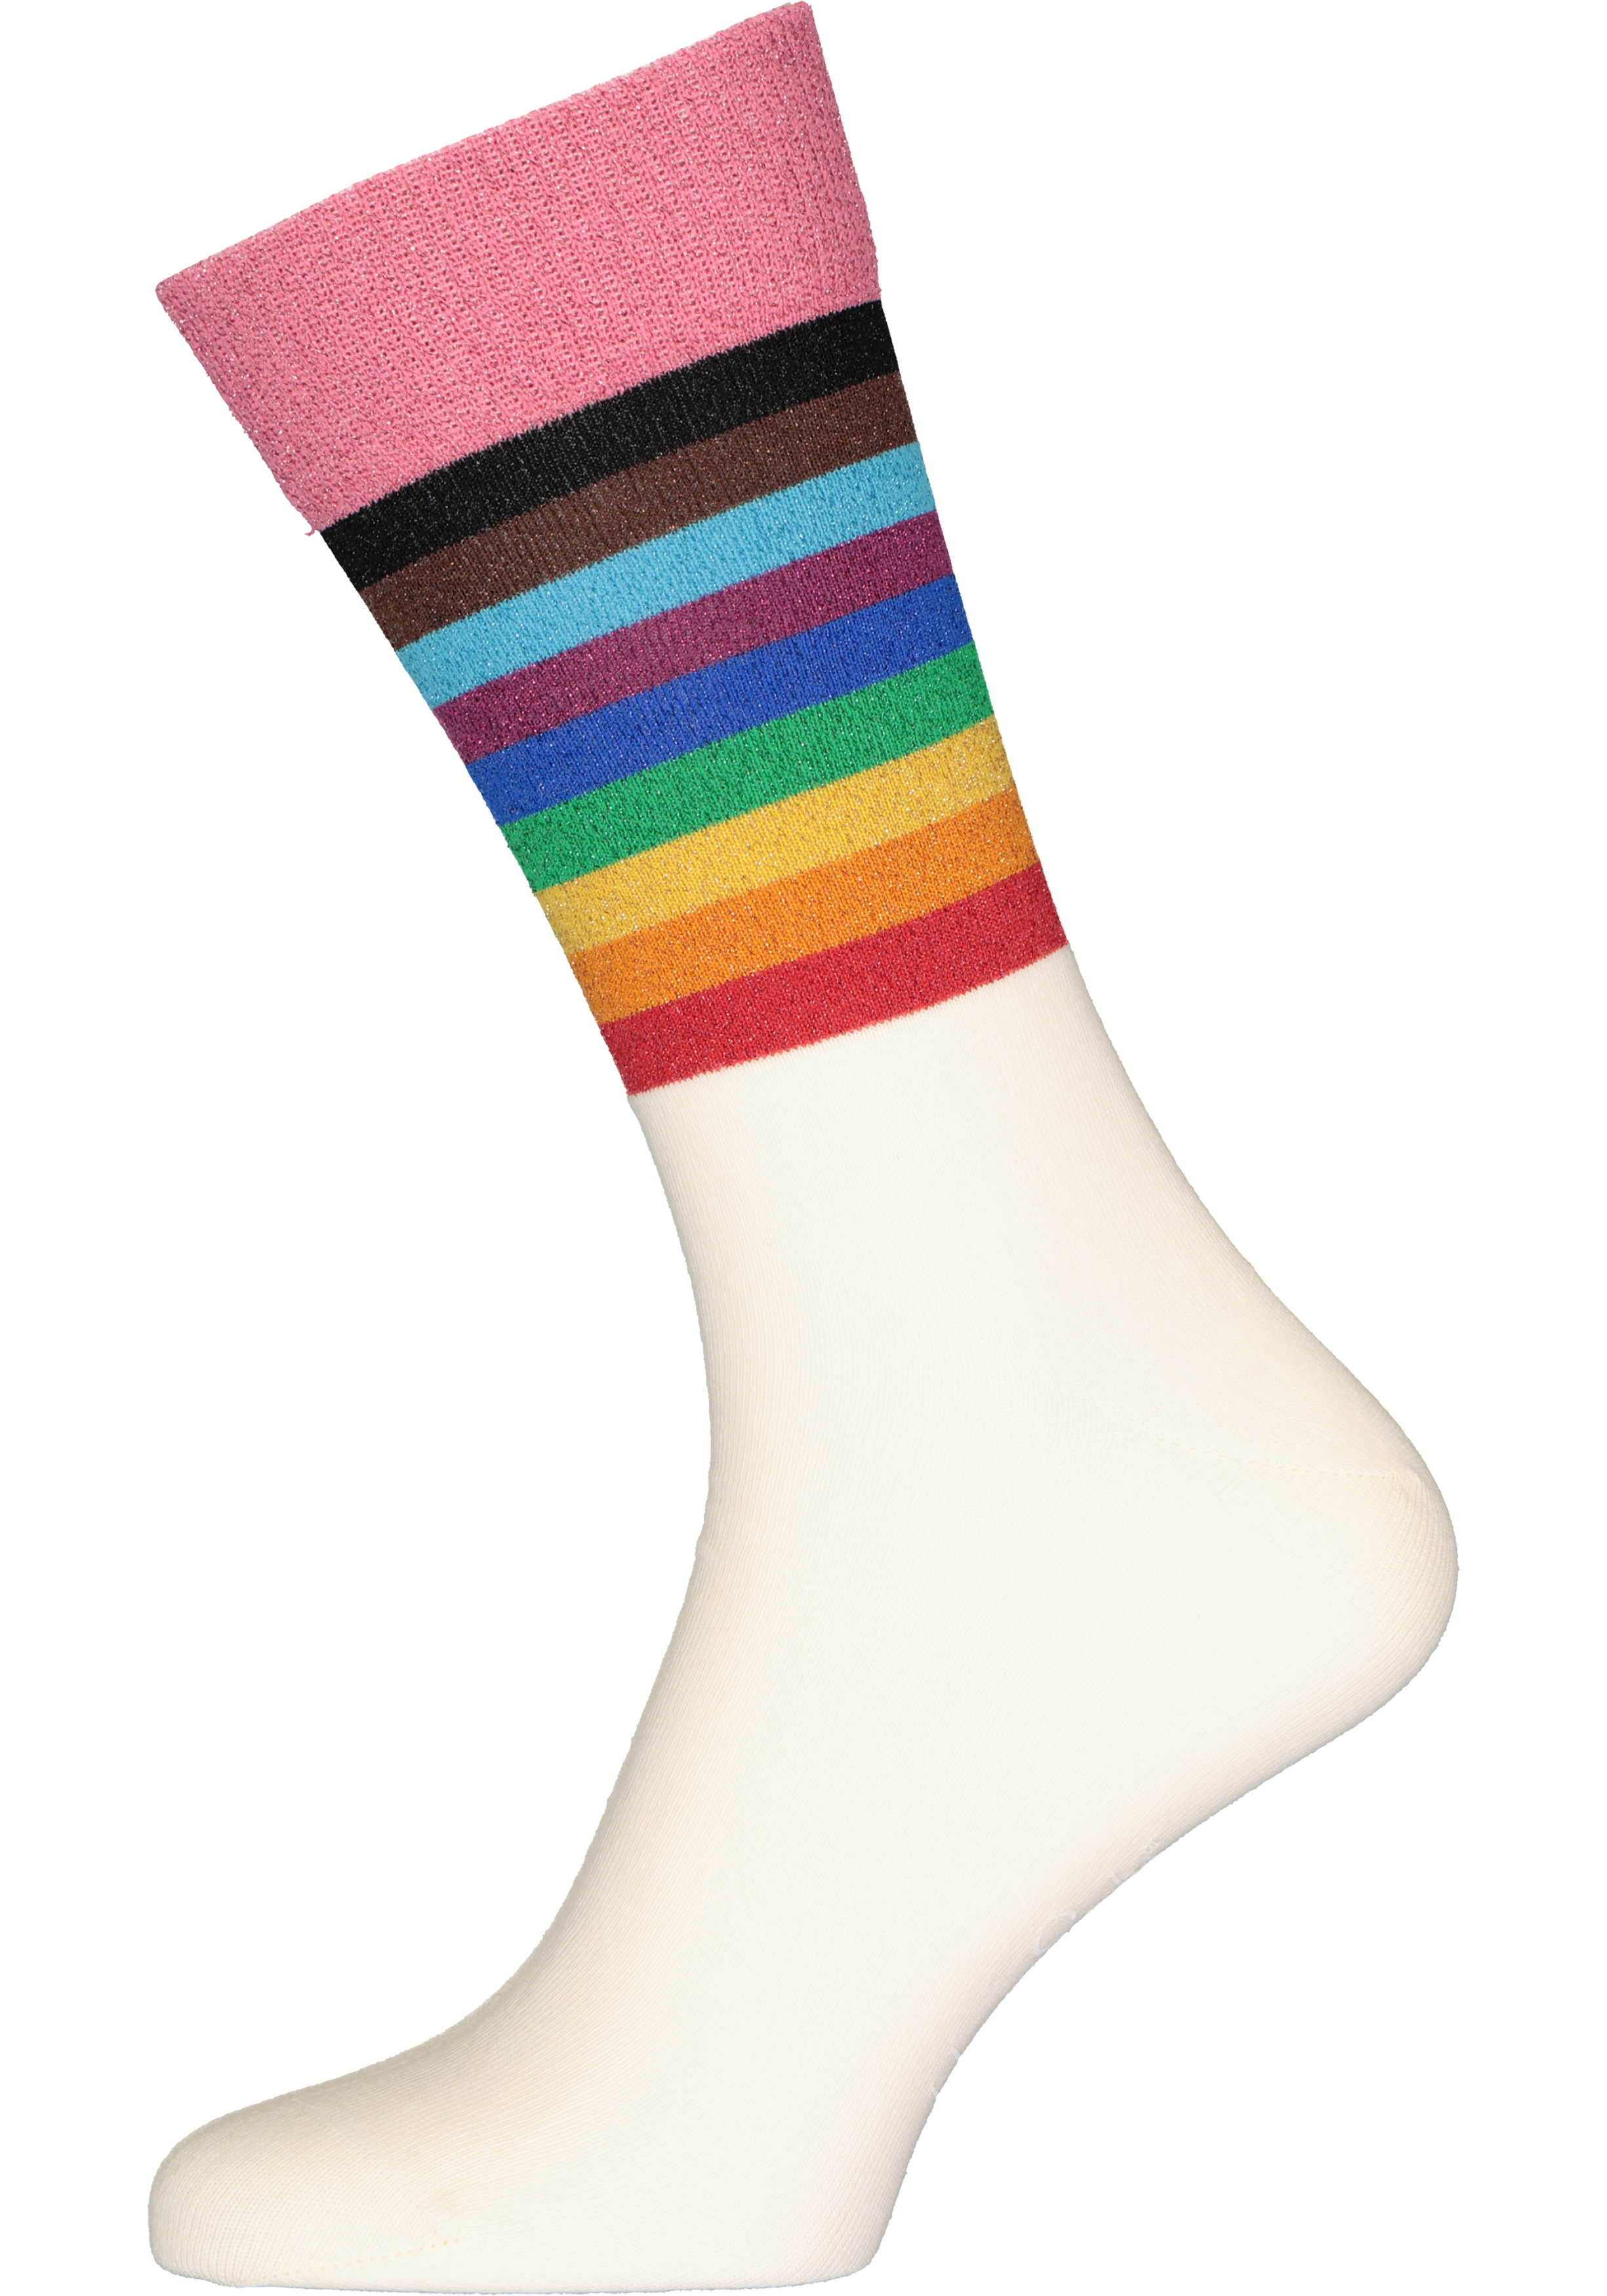 Bakkerij Klusjesman Zullen Happy Socks Pride Socks Gift Set (3-pack), regenboog sokken - Zomer SALE  tot 50% korting